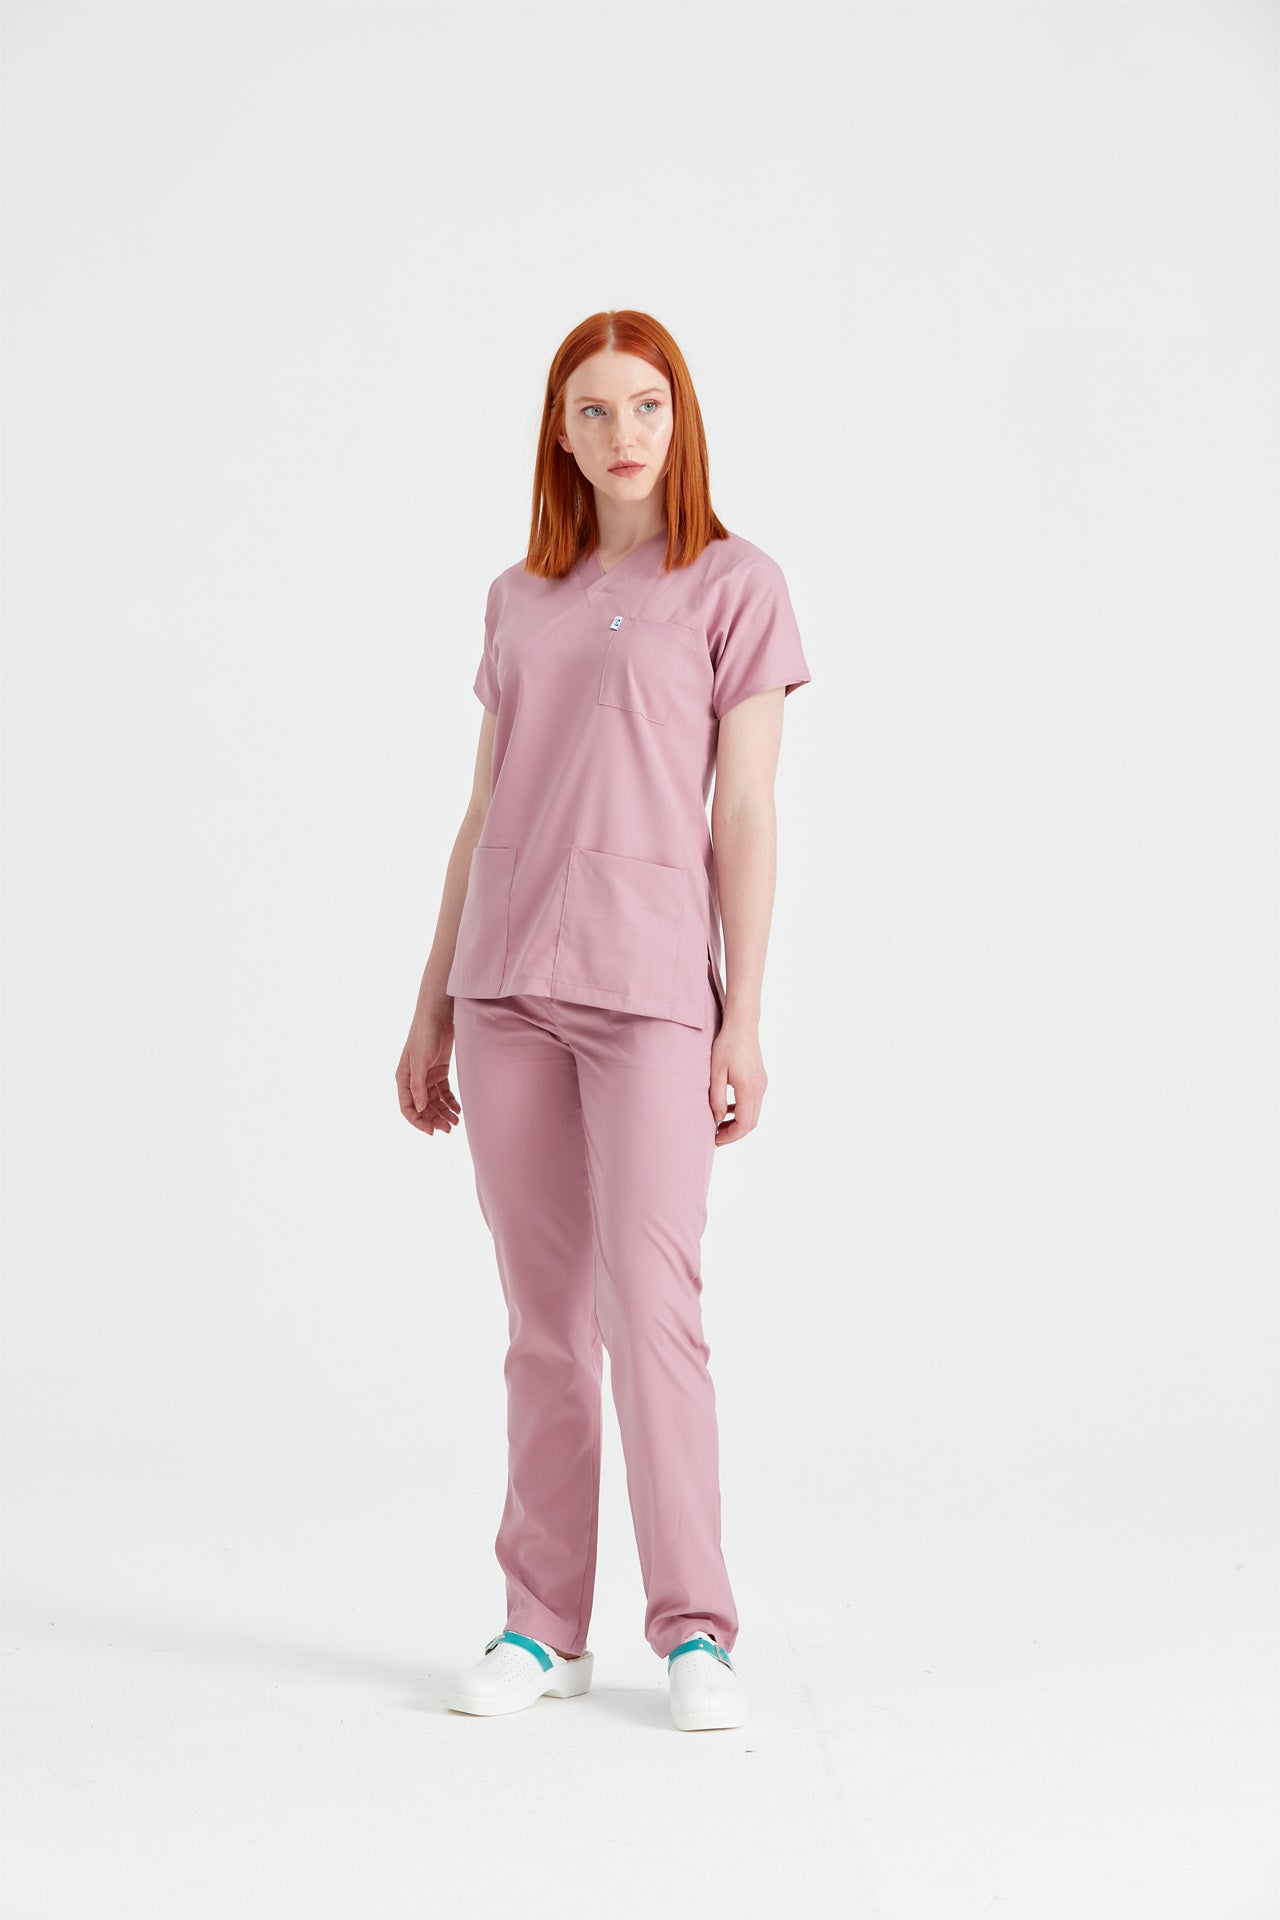 Asistenta medicala imbracata in costum medical roz clasic flex Rose, vedere din picioare